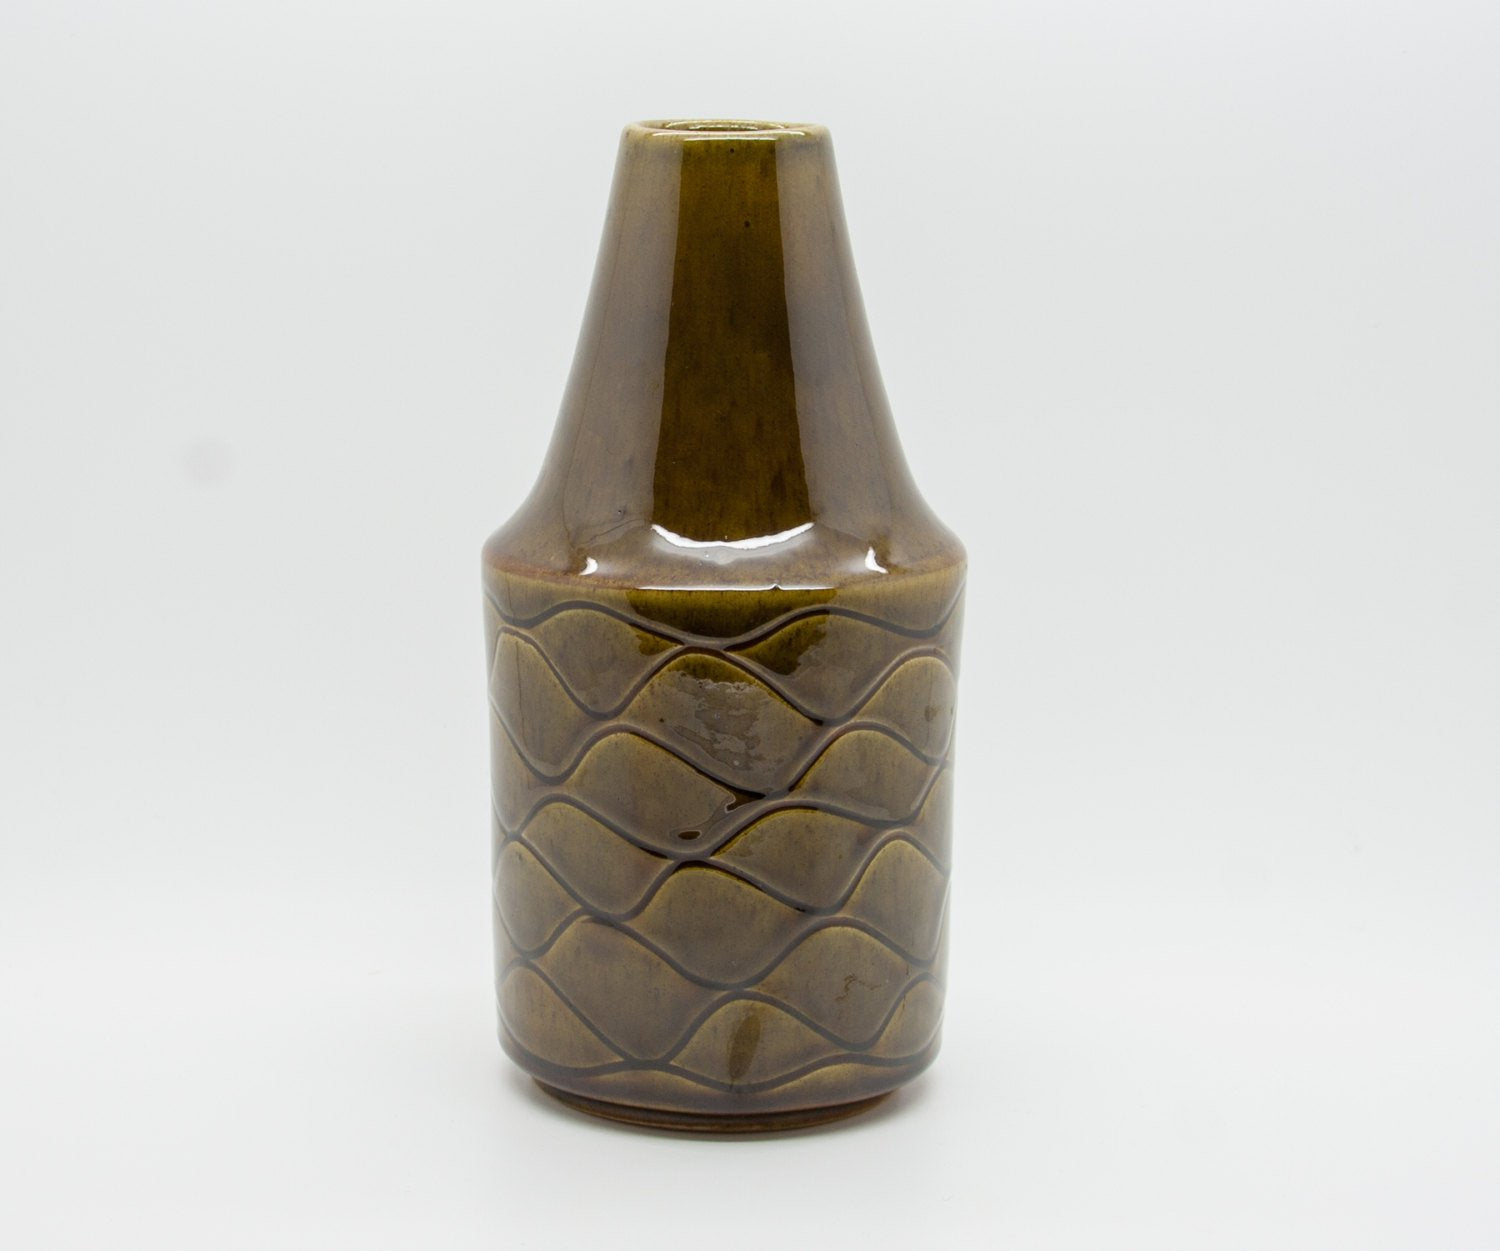 JACOB BANG Hegnetslund Green Brown Glazed Ceramic Vase Mollaris.com 